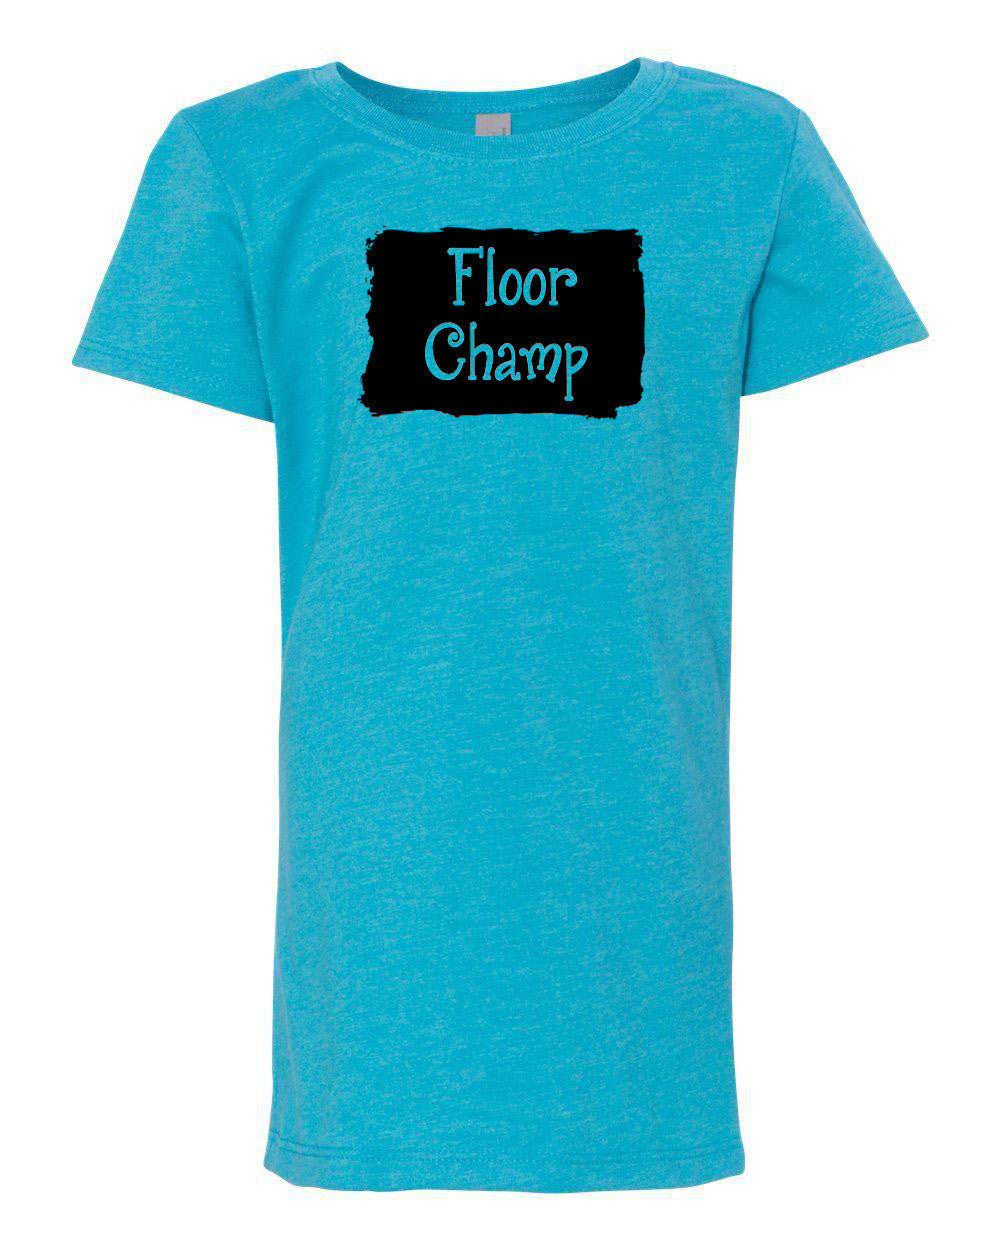 Floor Champ Girls T-Shirt Ocean Blue